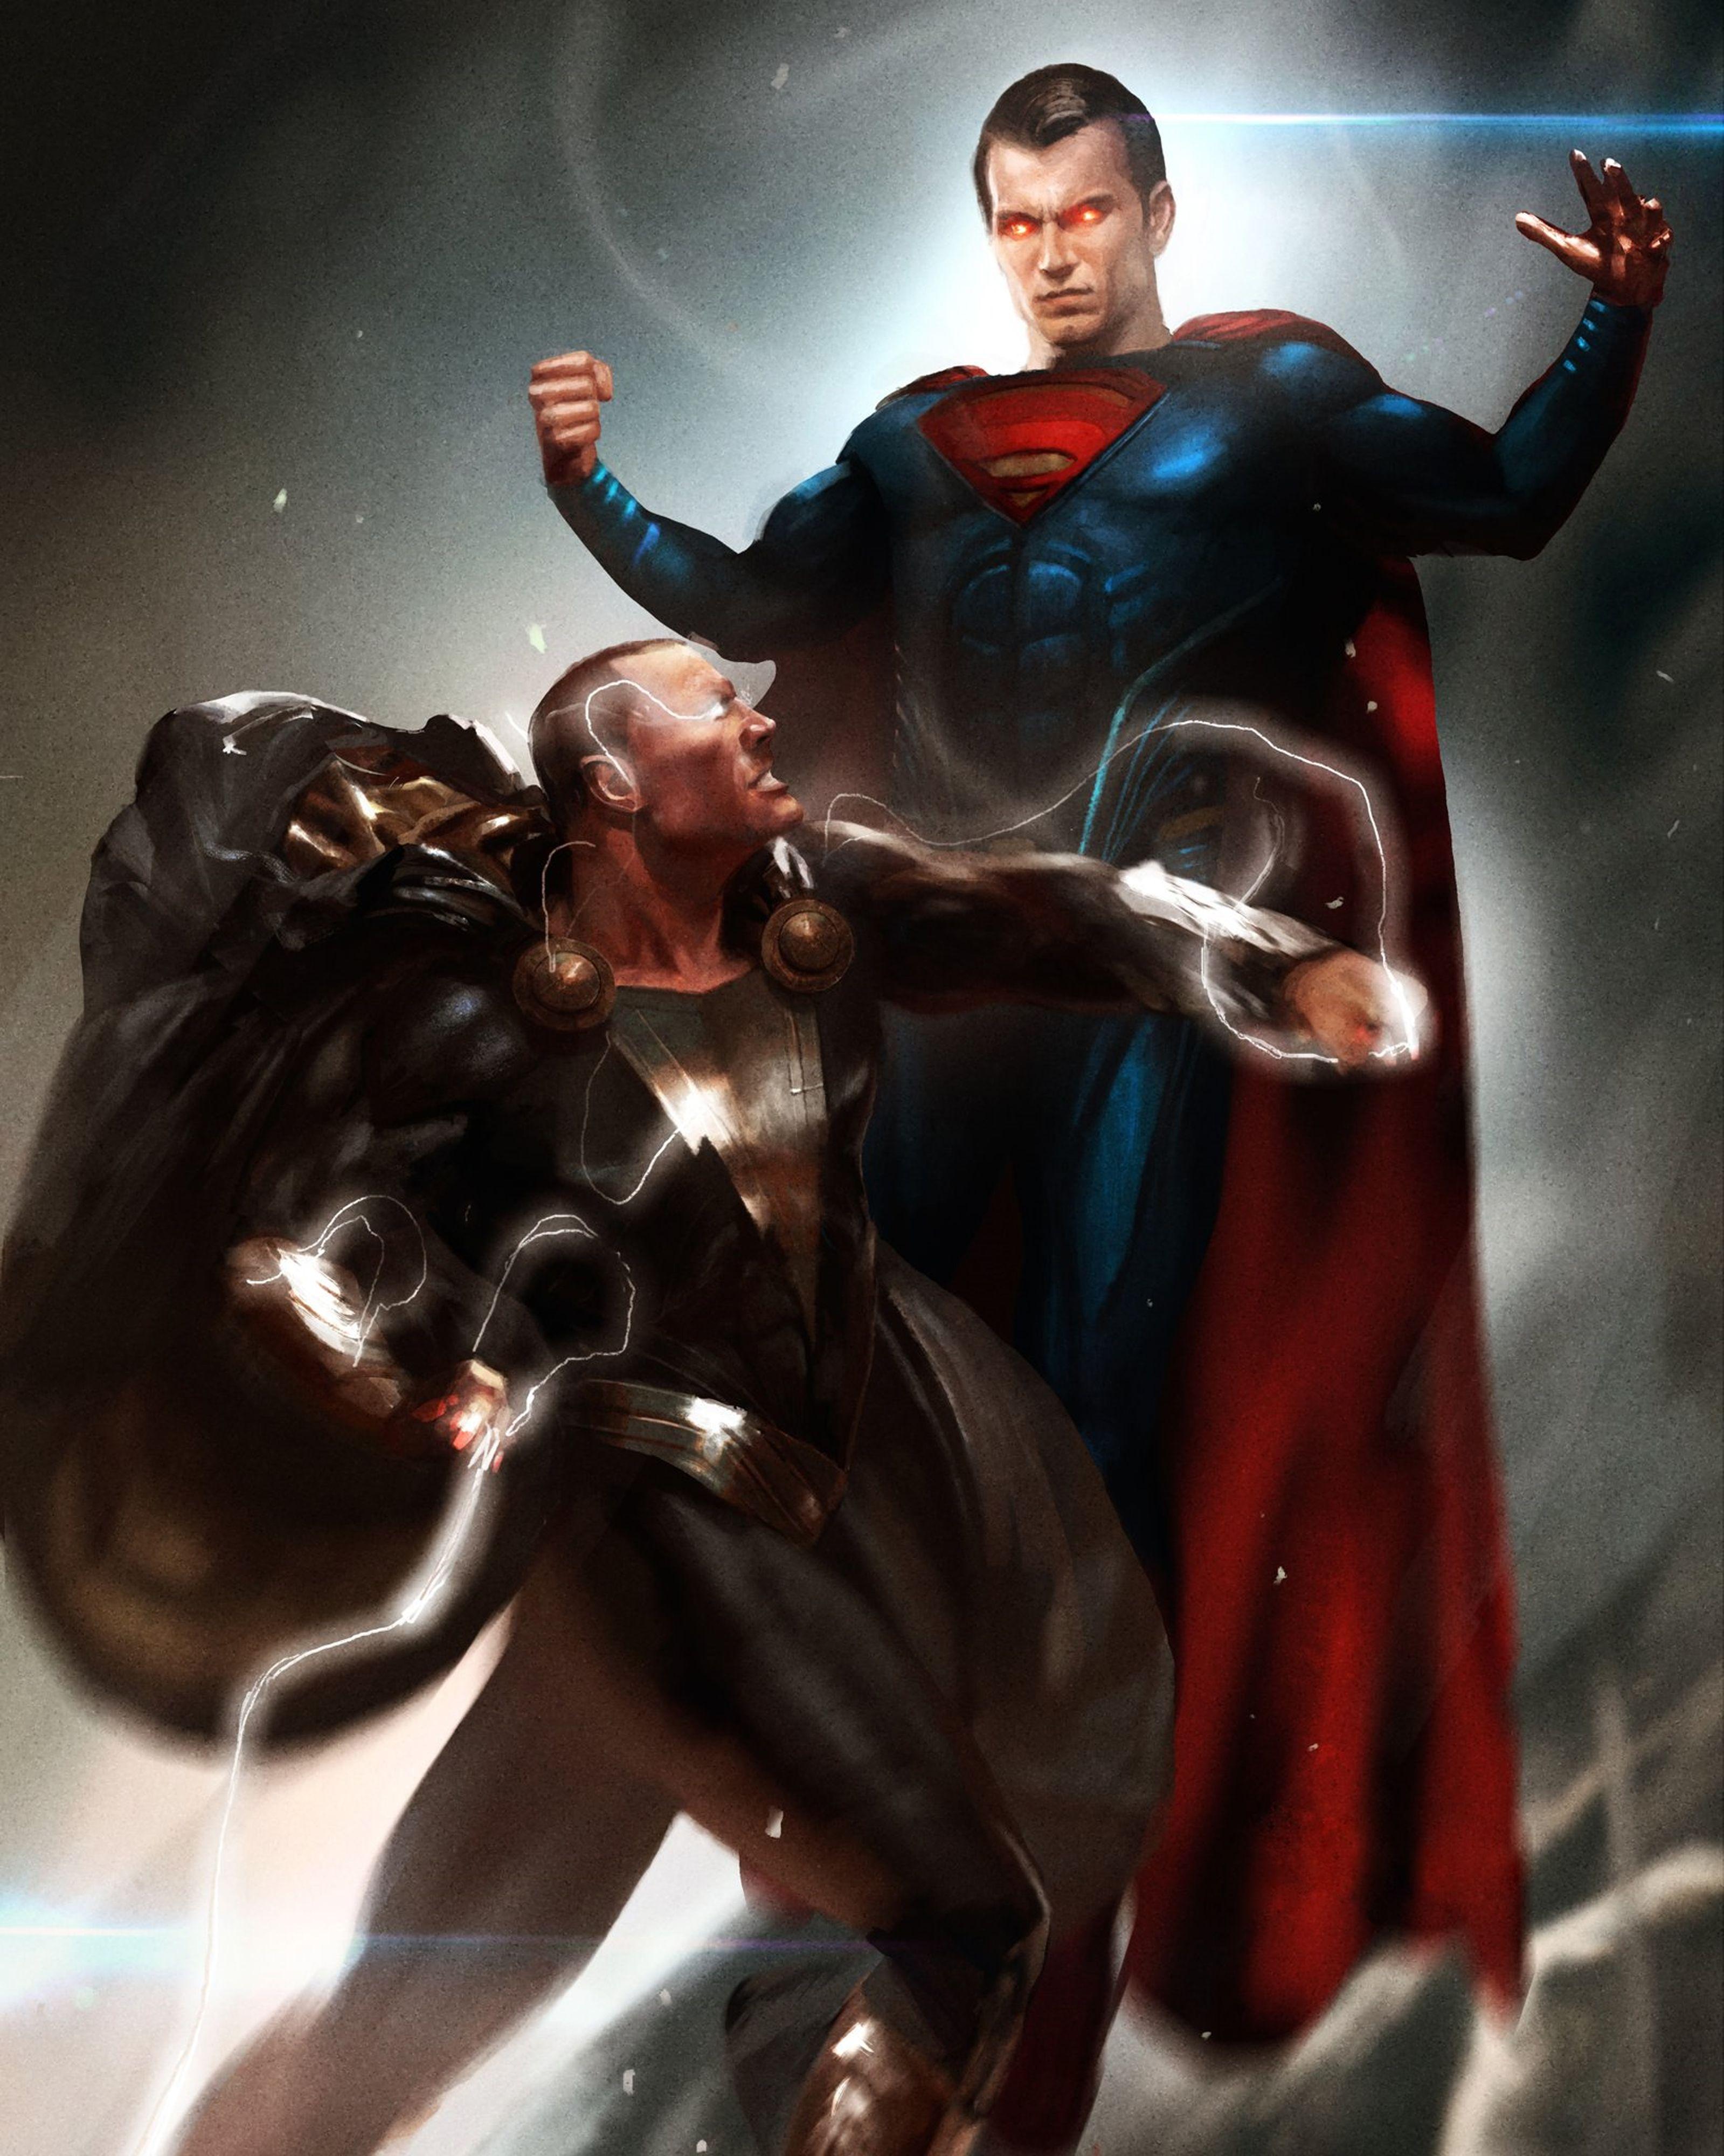 Man of steel vs Black adam #Superman #HenryCavill #Blackadam